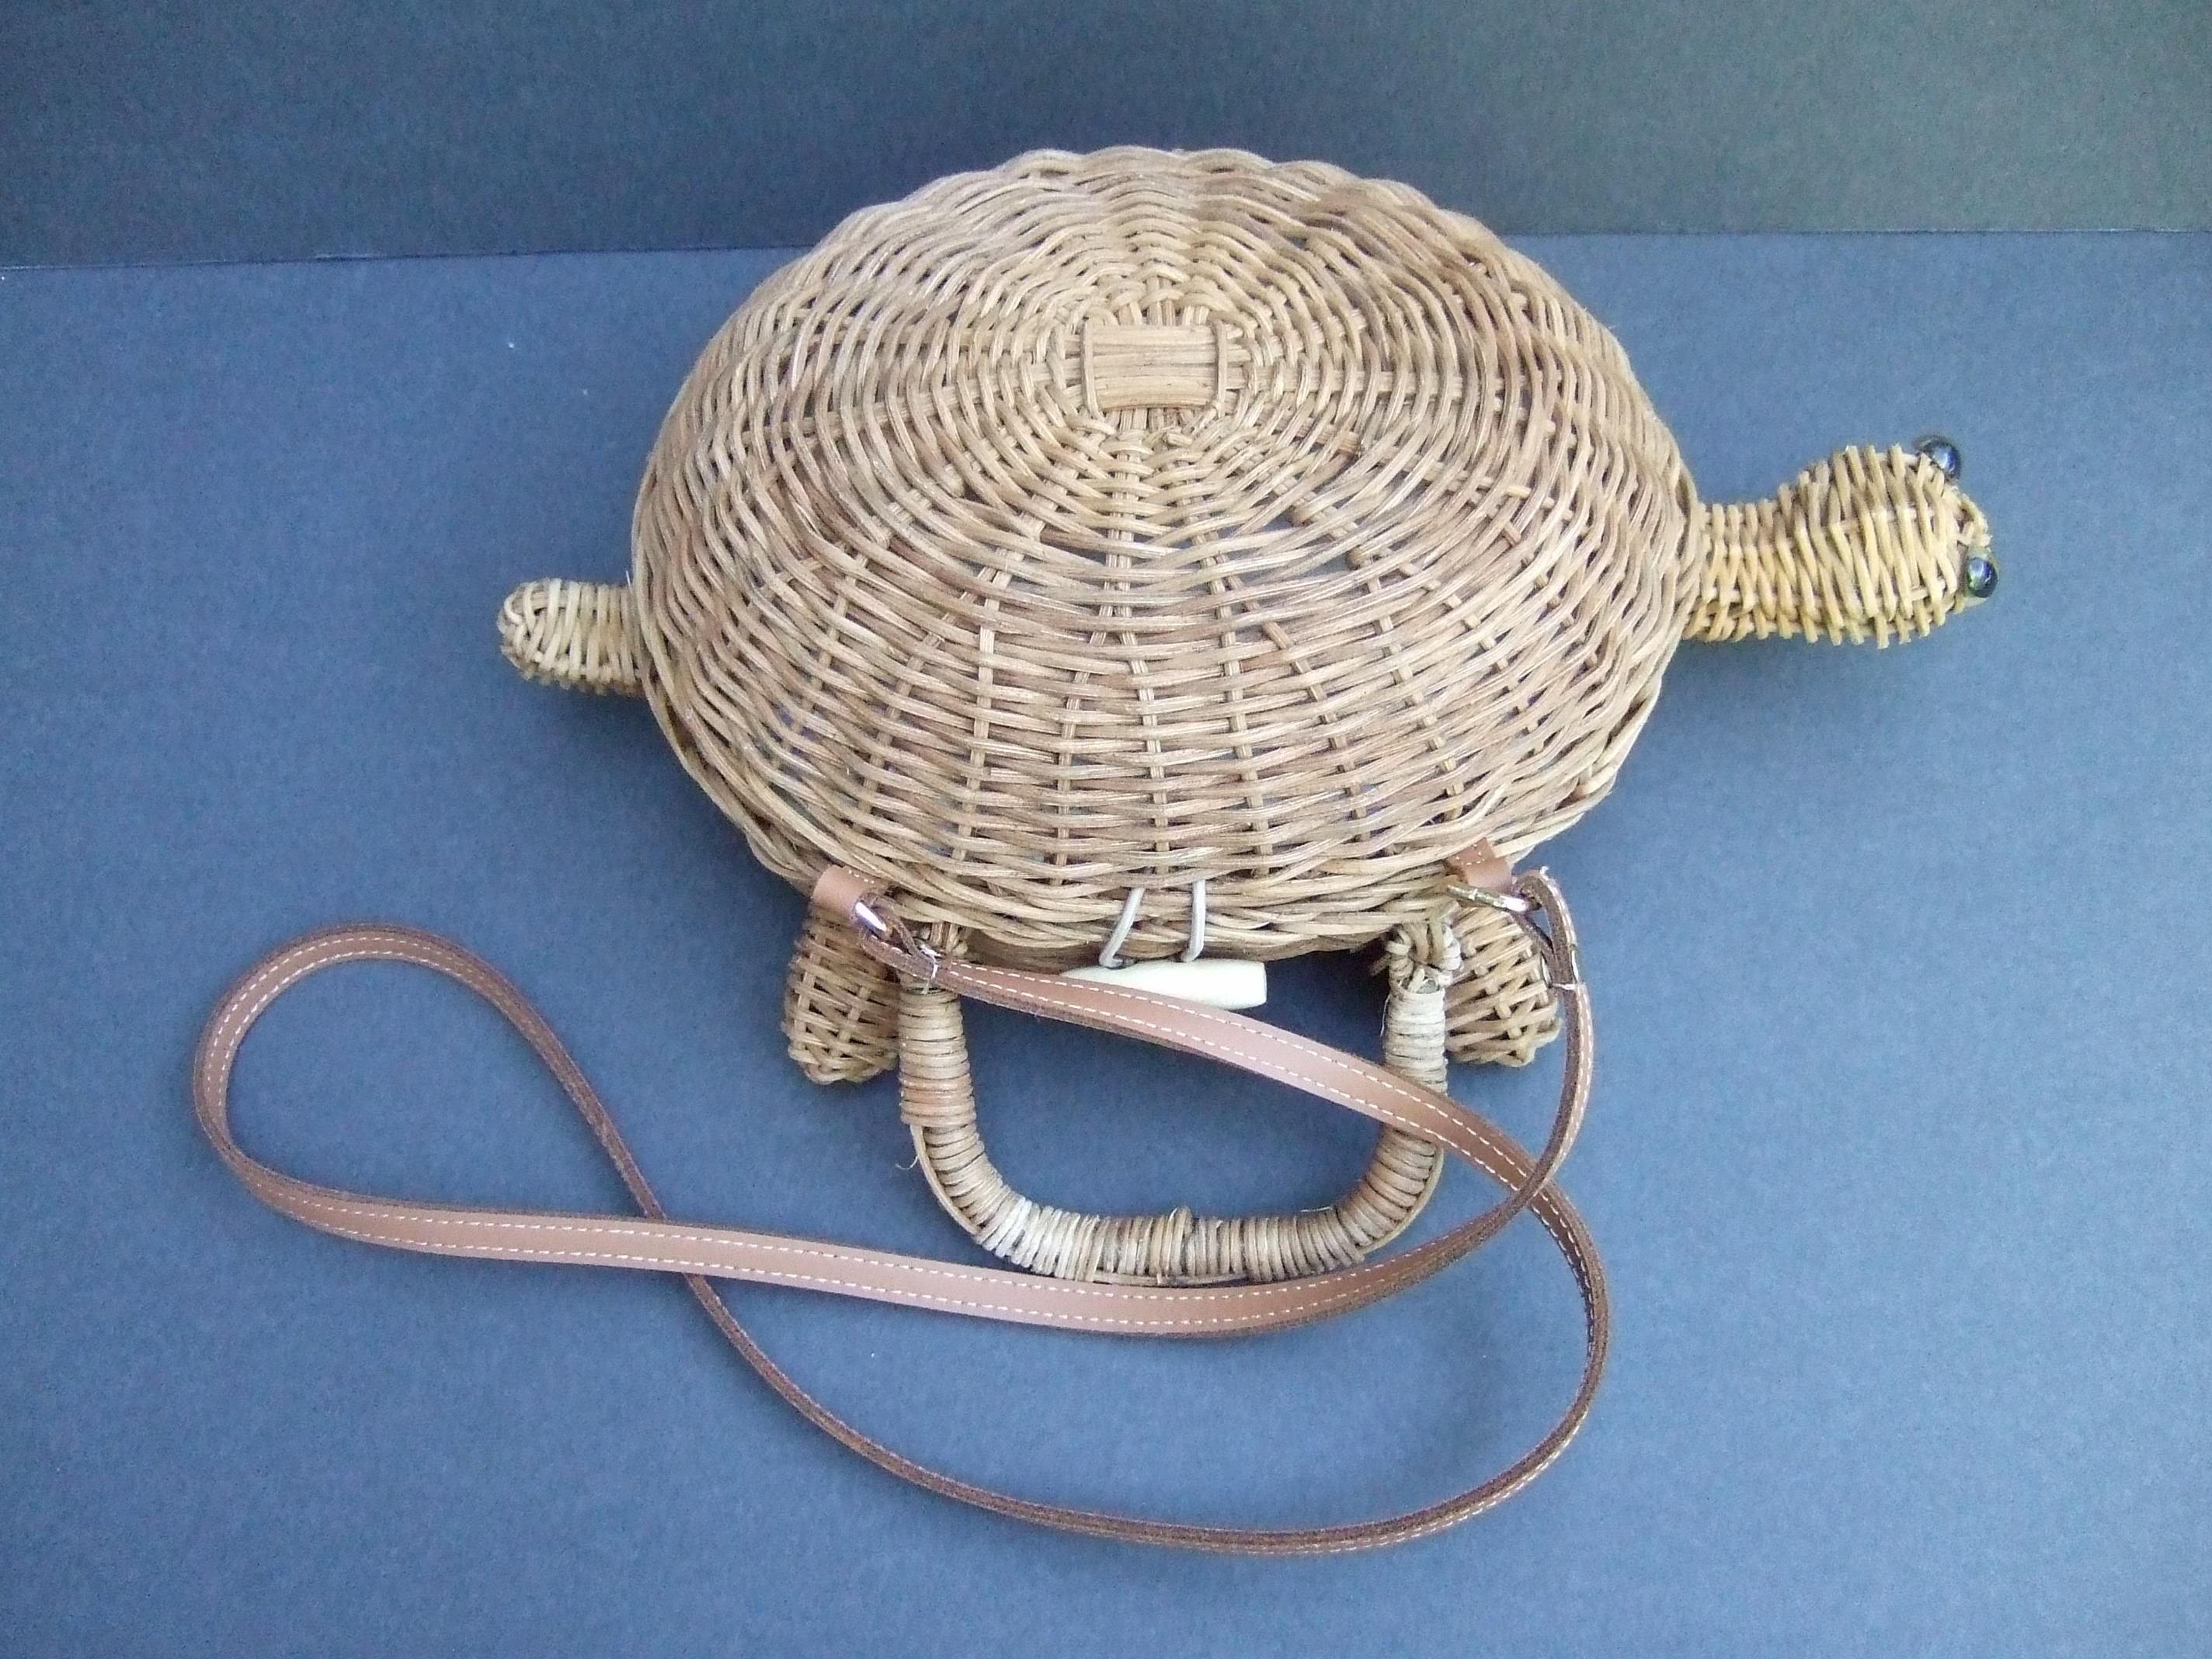 Charming Woven Wicker Turtle Design Versatile Handbag - Shoulder Bag c 1990s 8